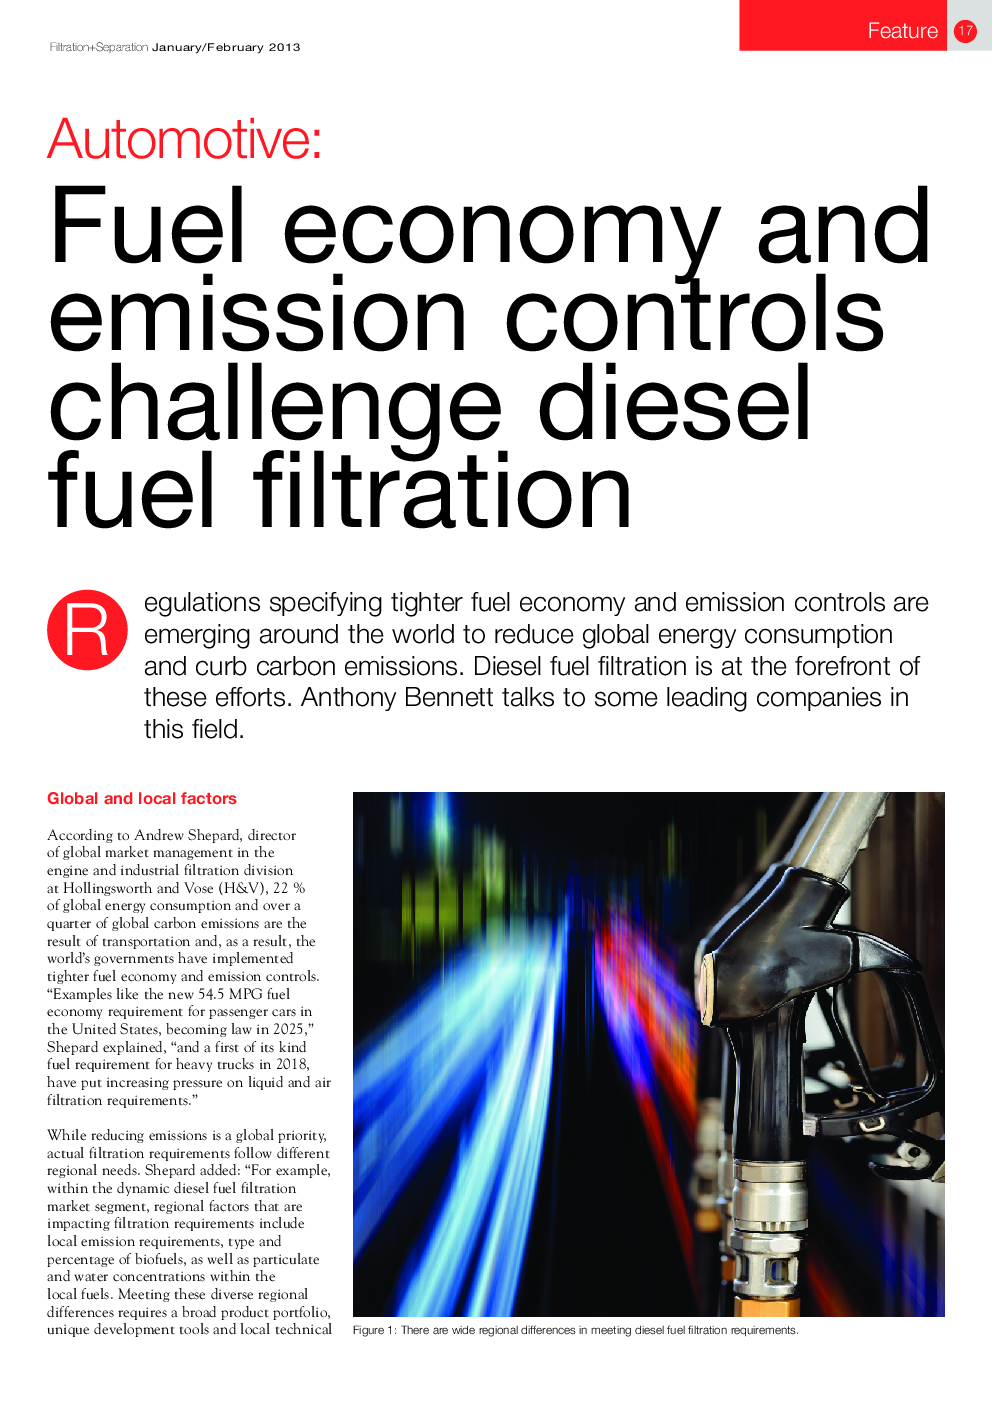 Automotive: Fuel economy and emission controls challenge diesel fuel filtration